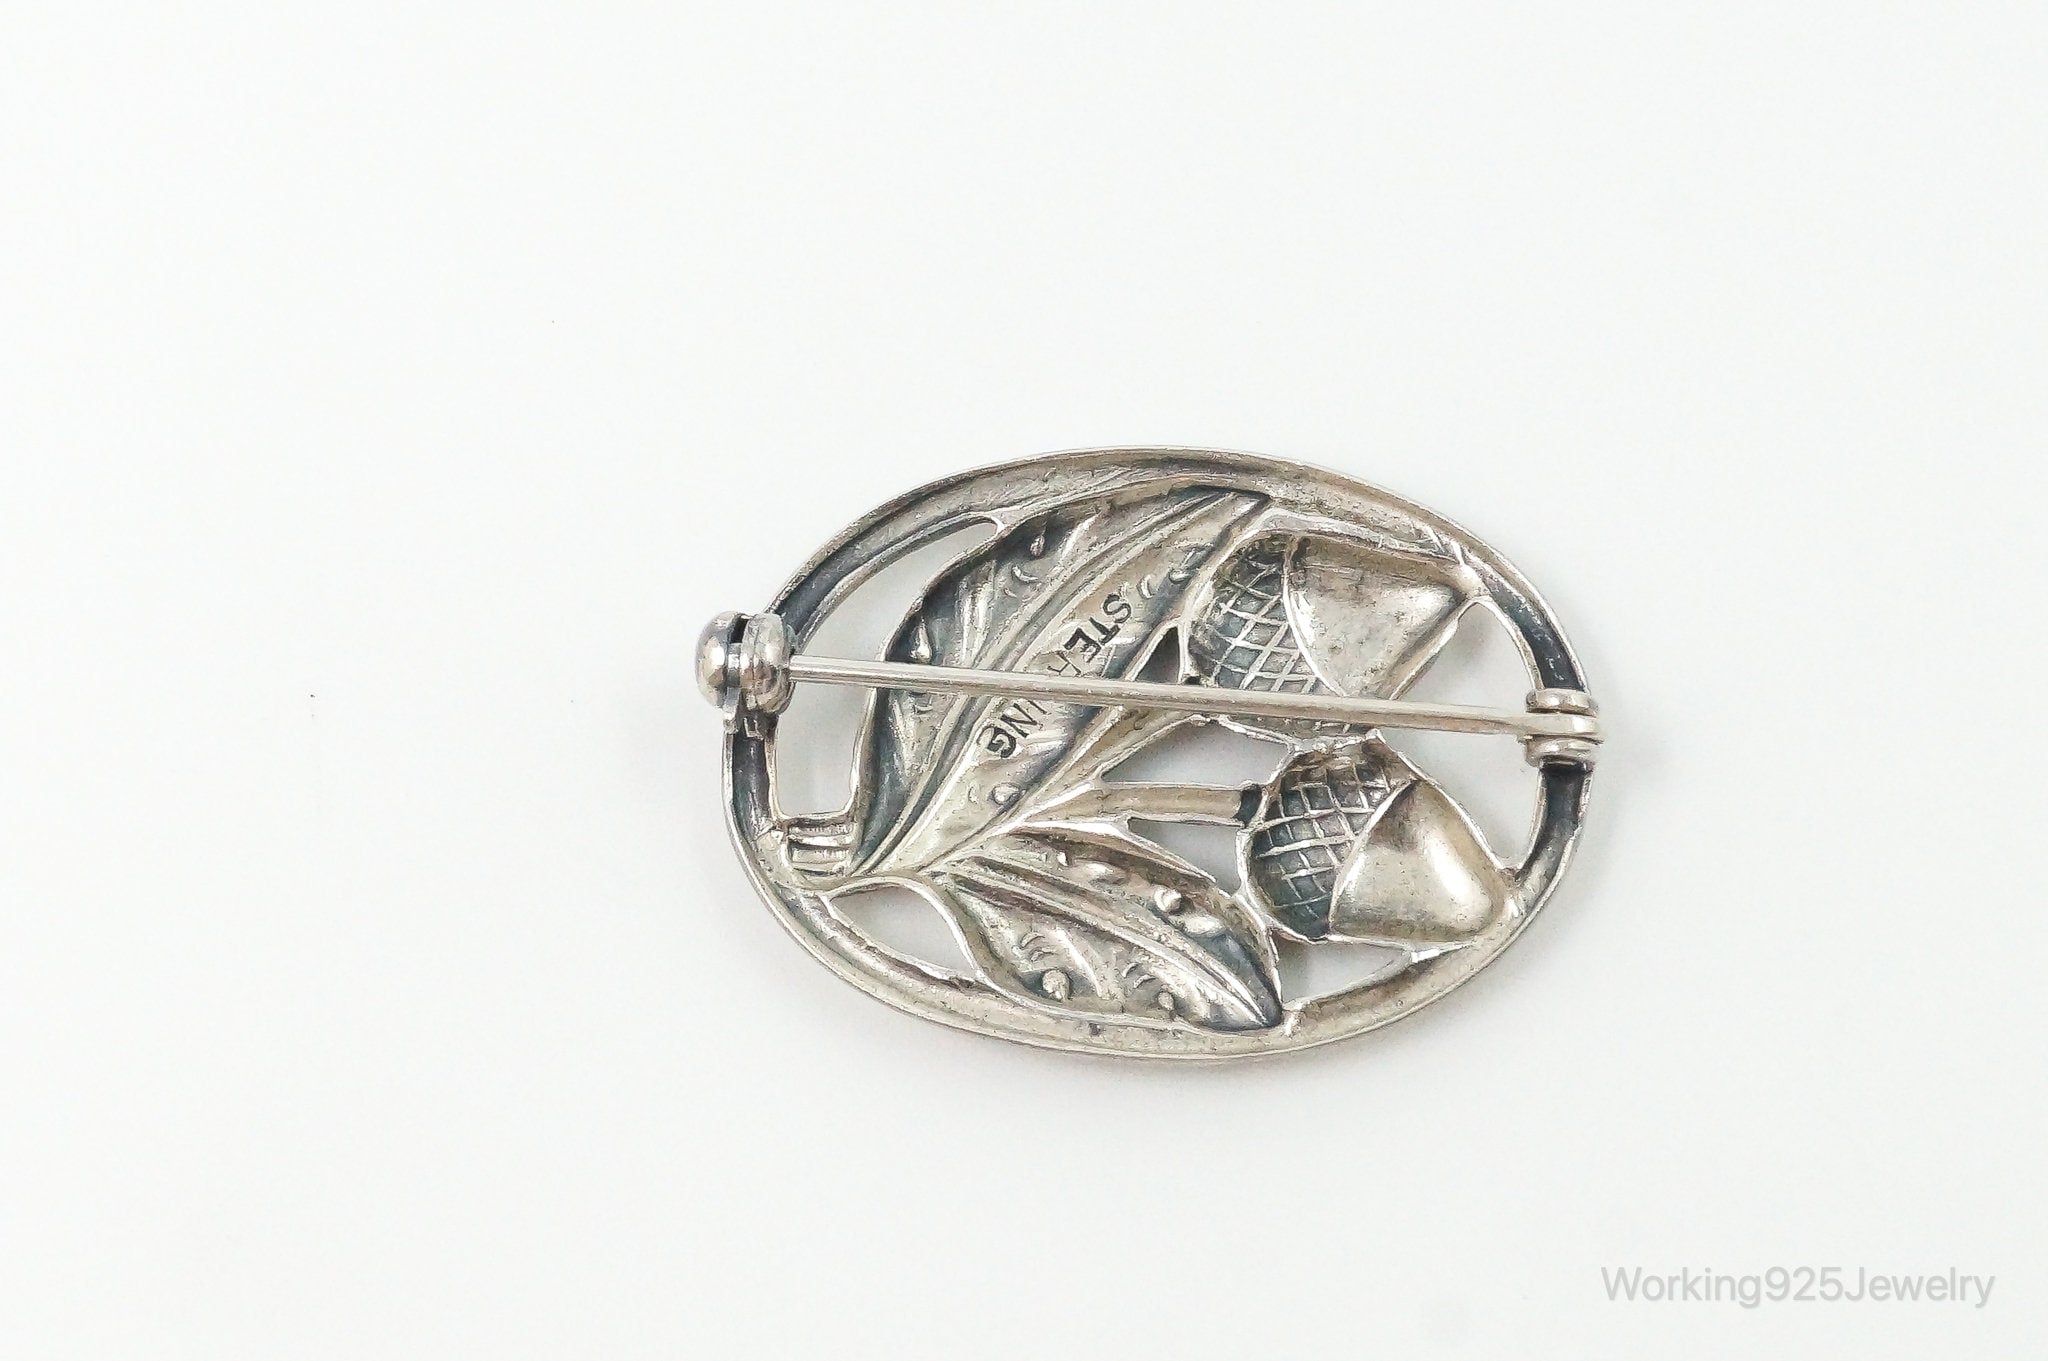 Antique Acorns Sterling Silver Brooch Pin